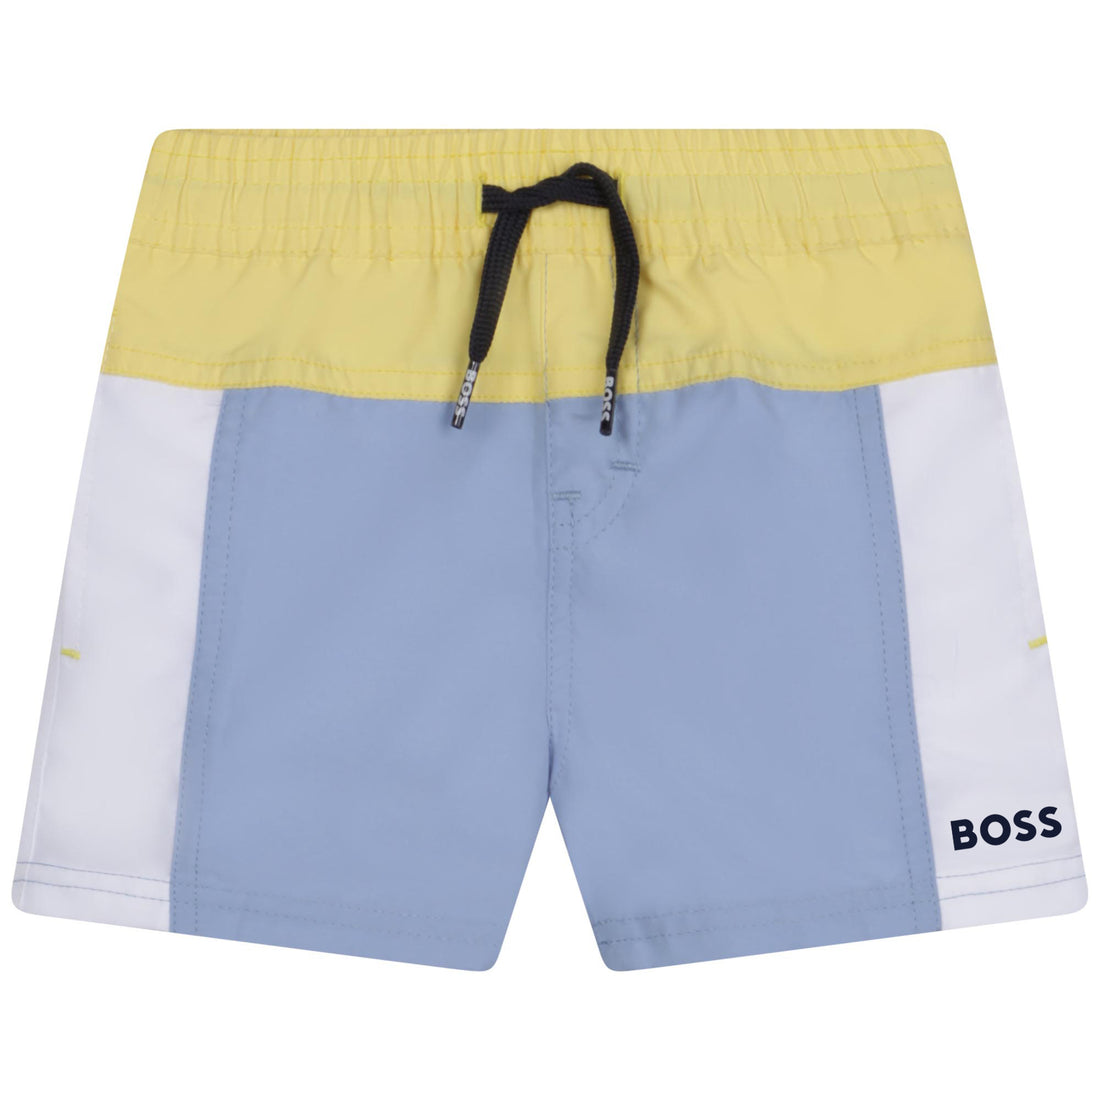 Hugo Boss Swim Shorts Style: J04474